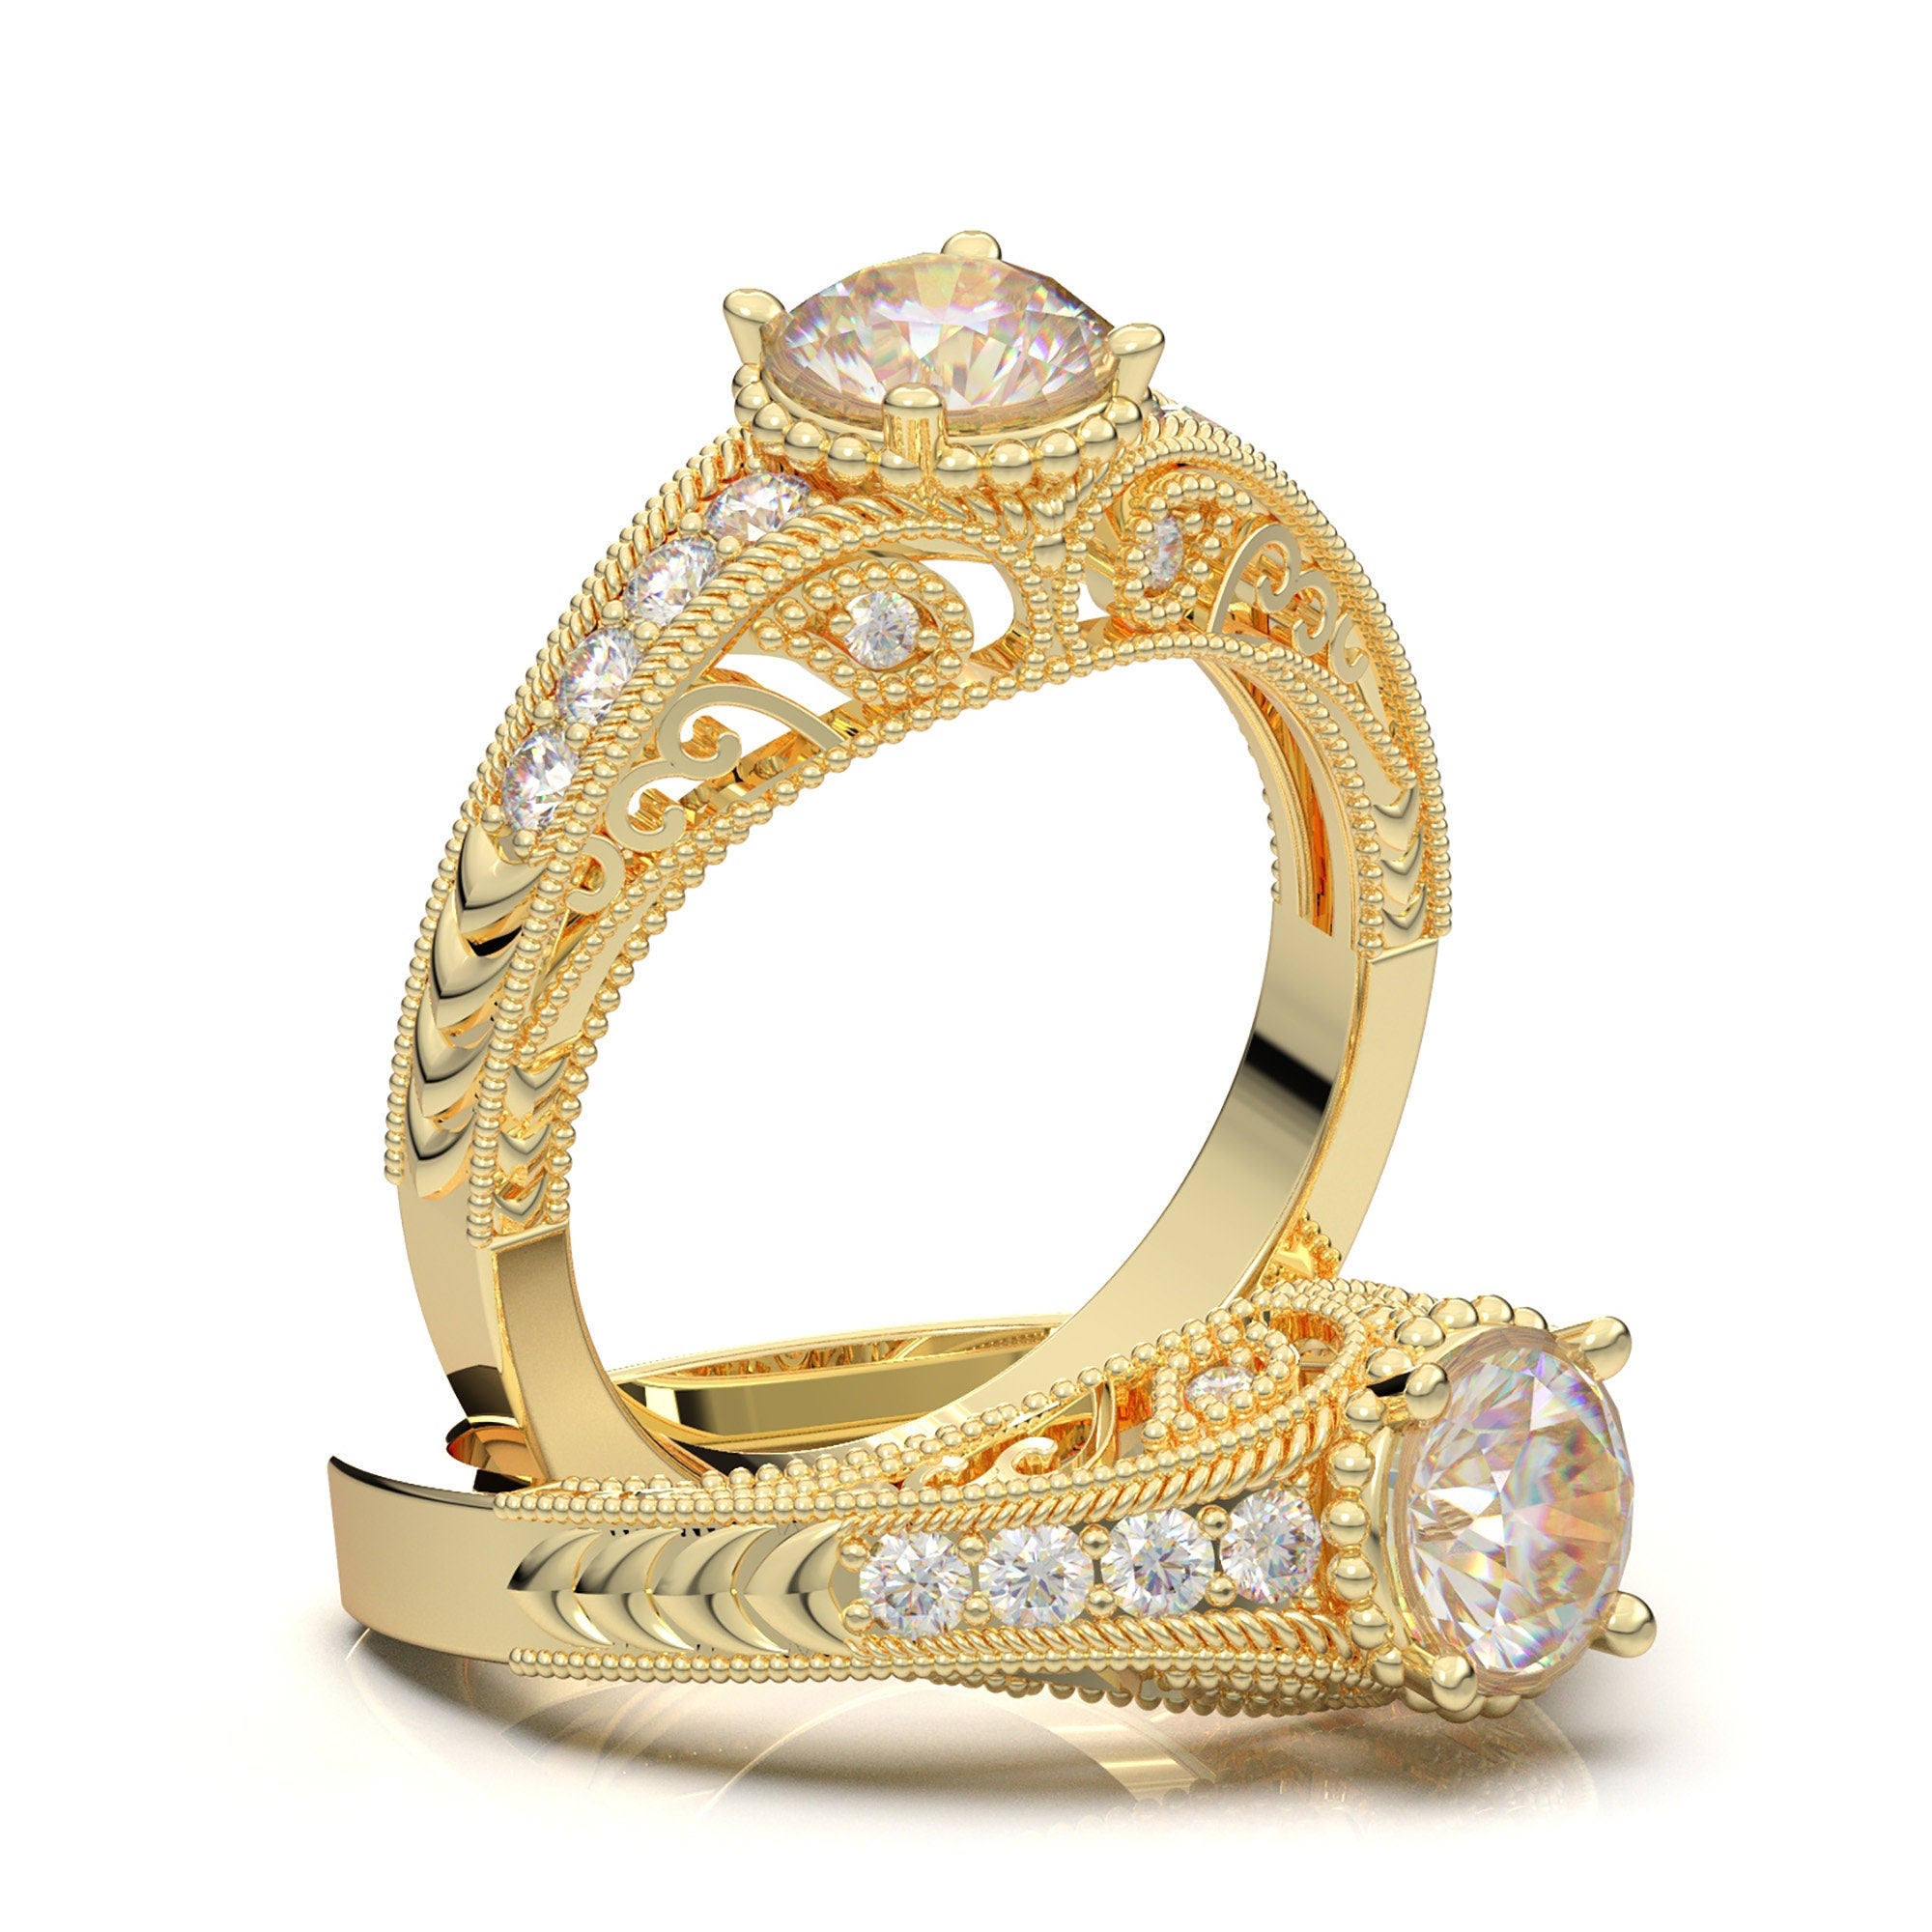 Antique white gold black and white diamond ring | FIRESC